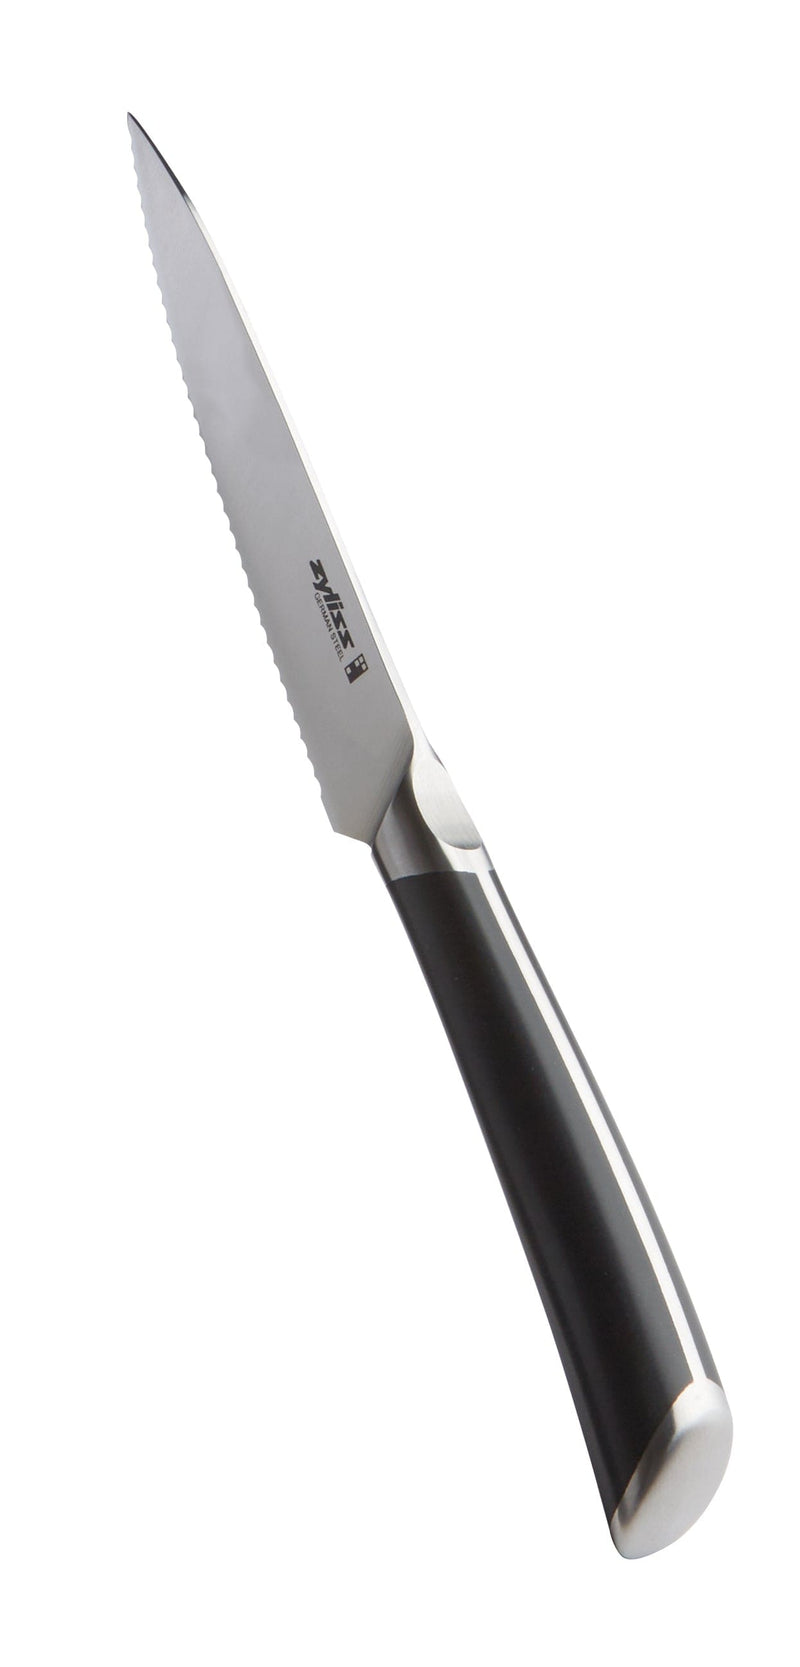 Zyliss Comfort Pro Paring Knife 4.5 inch E920273U